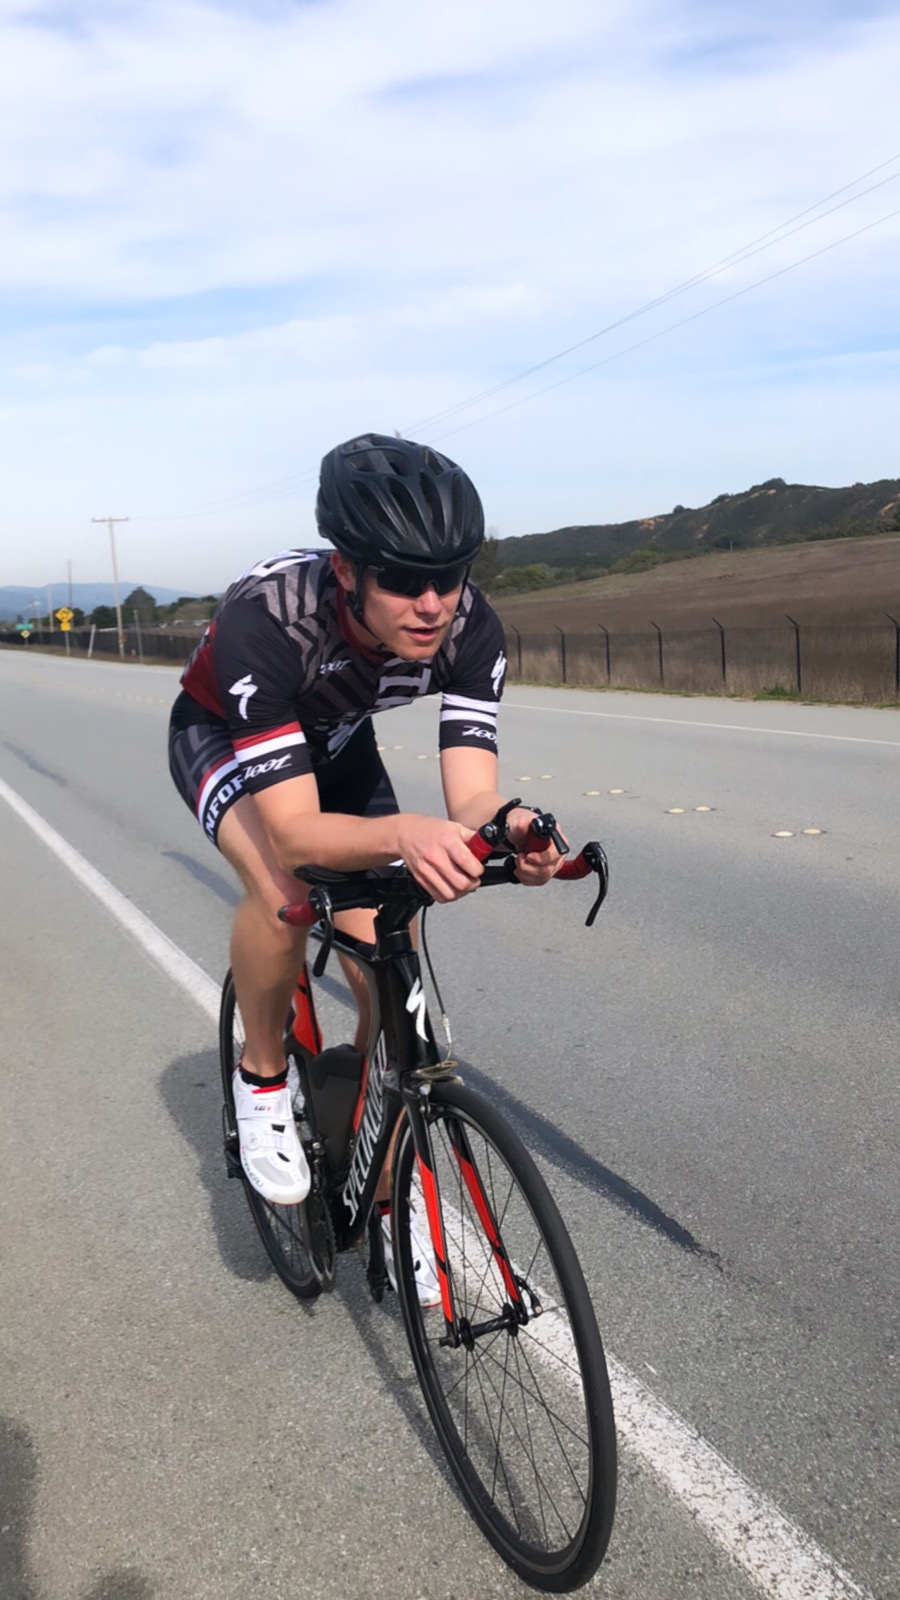 Training ride near Stanford on my TT bike